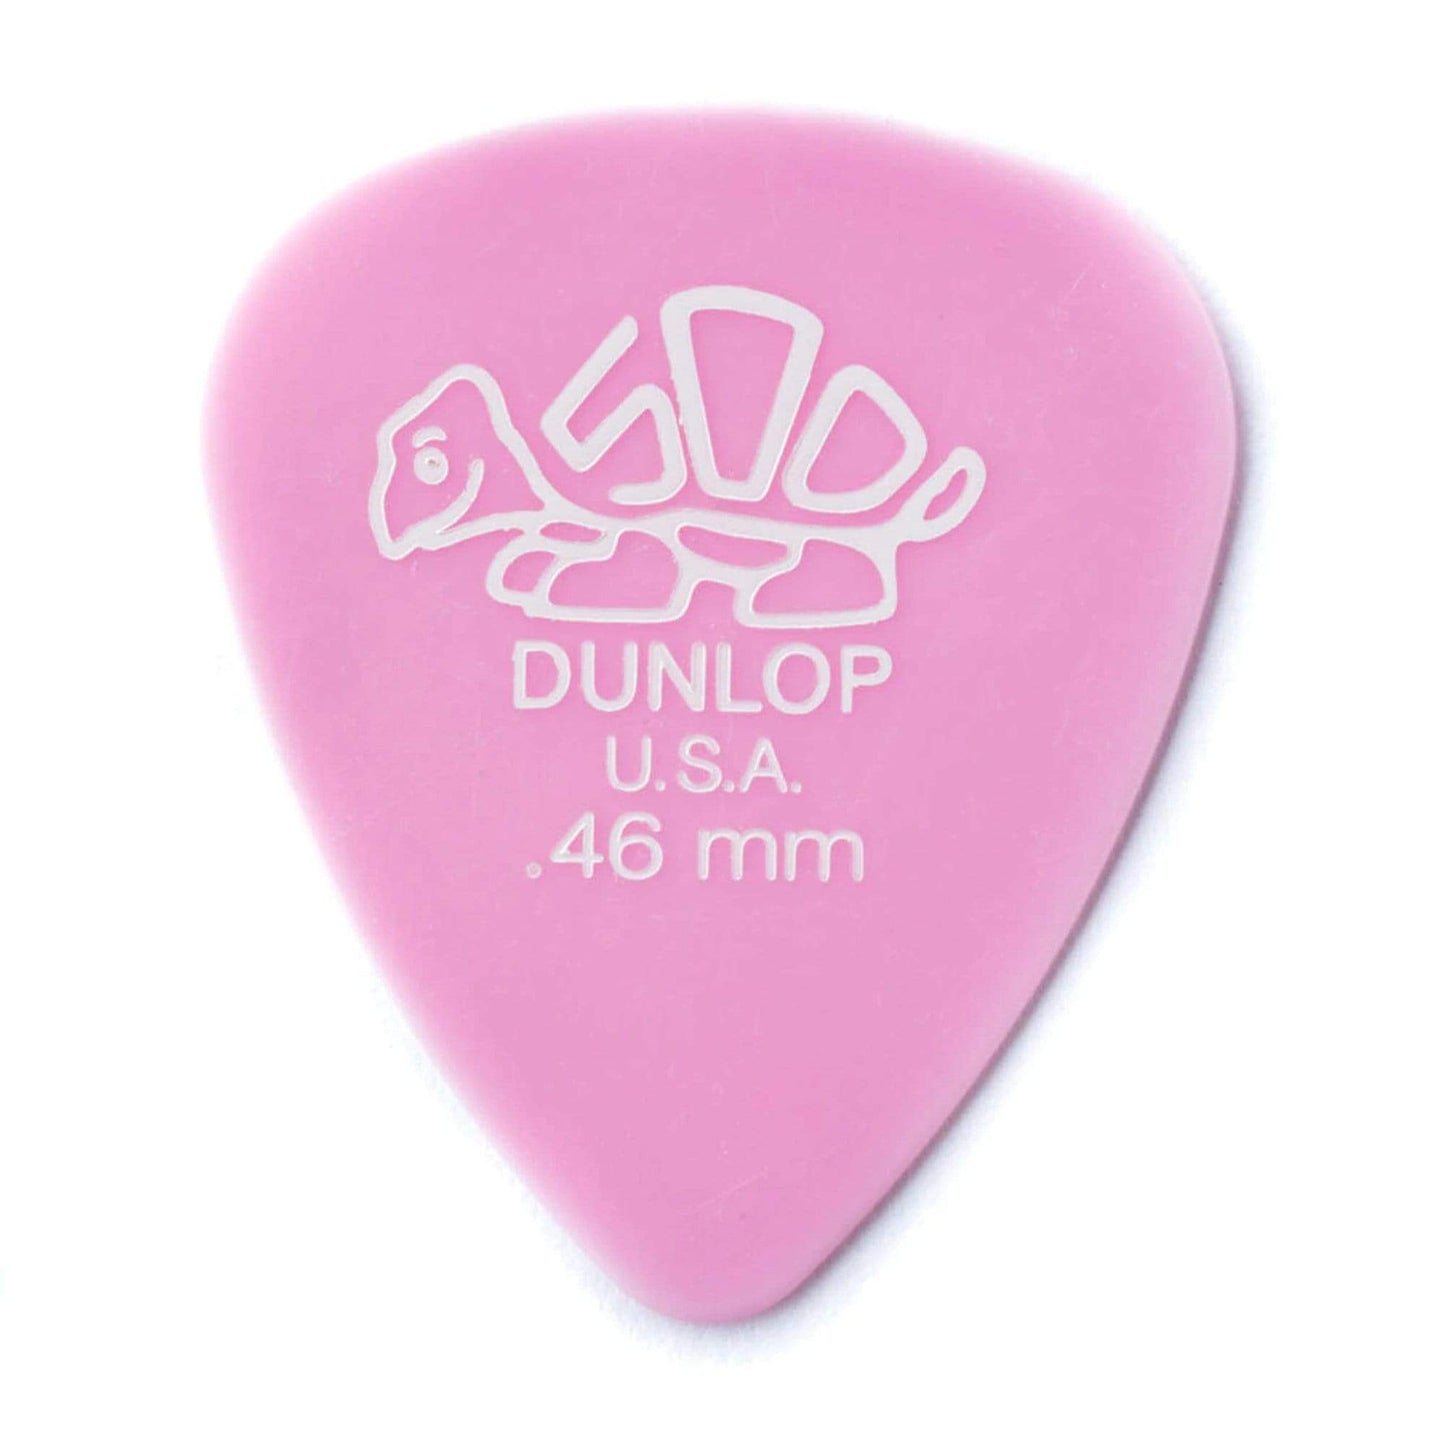 Dunlop Delrin 500 Guitar Picks .46mm Light Pink Player Pack 4 Pack (48) Bundle Accessories / Picks